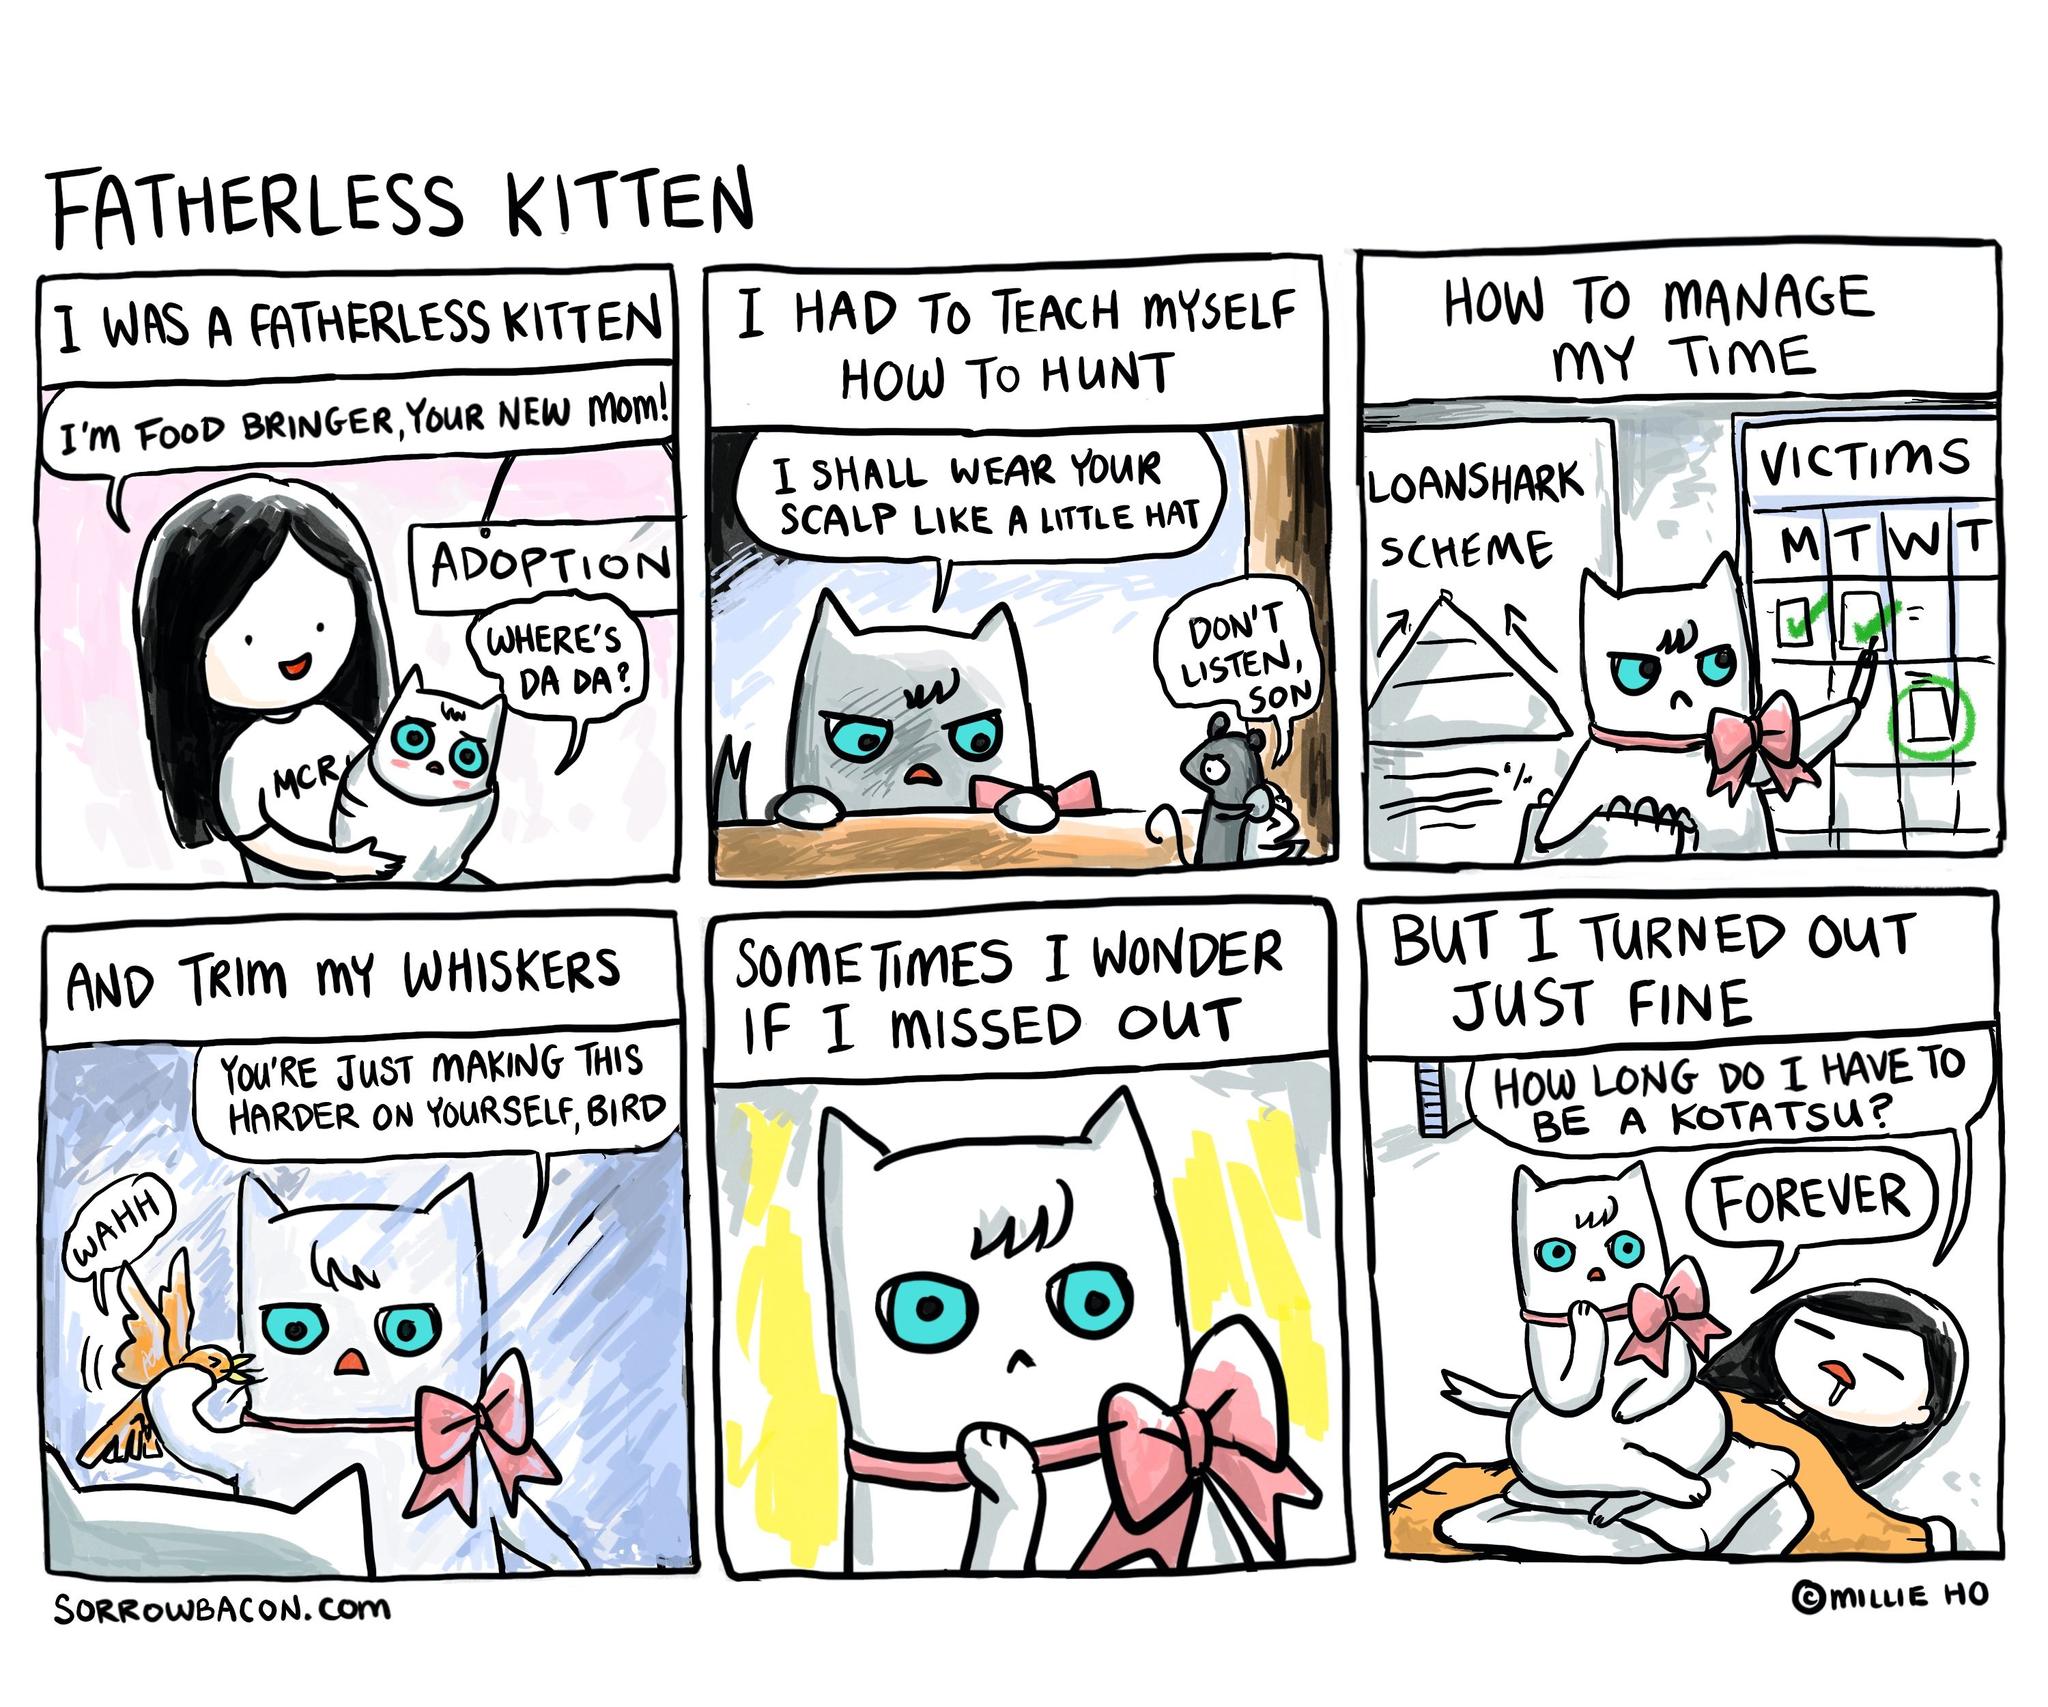 Fatherless Kitten sorrowbacon comic